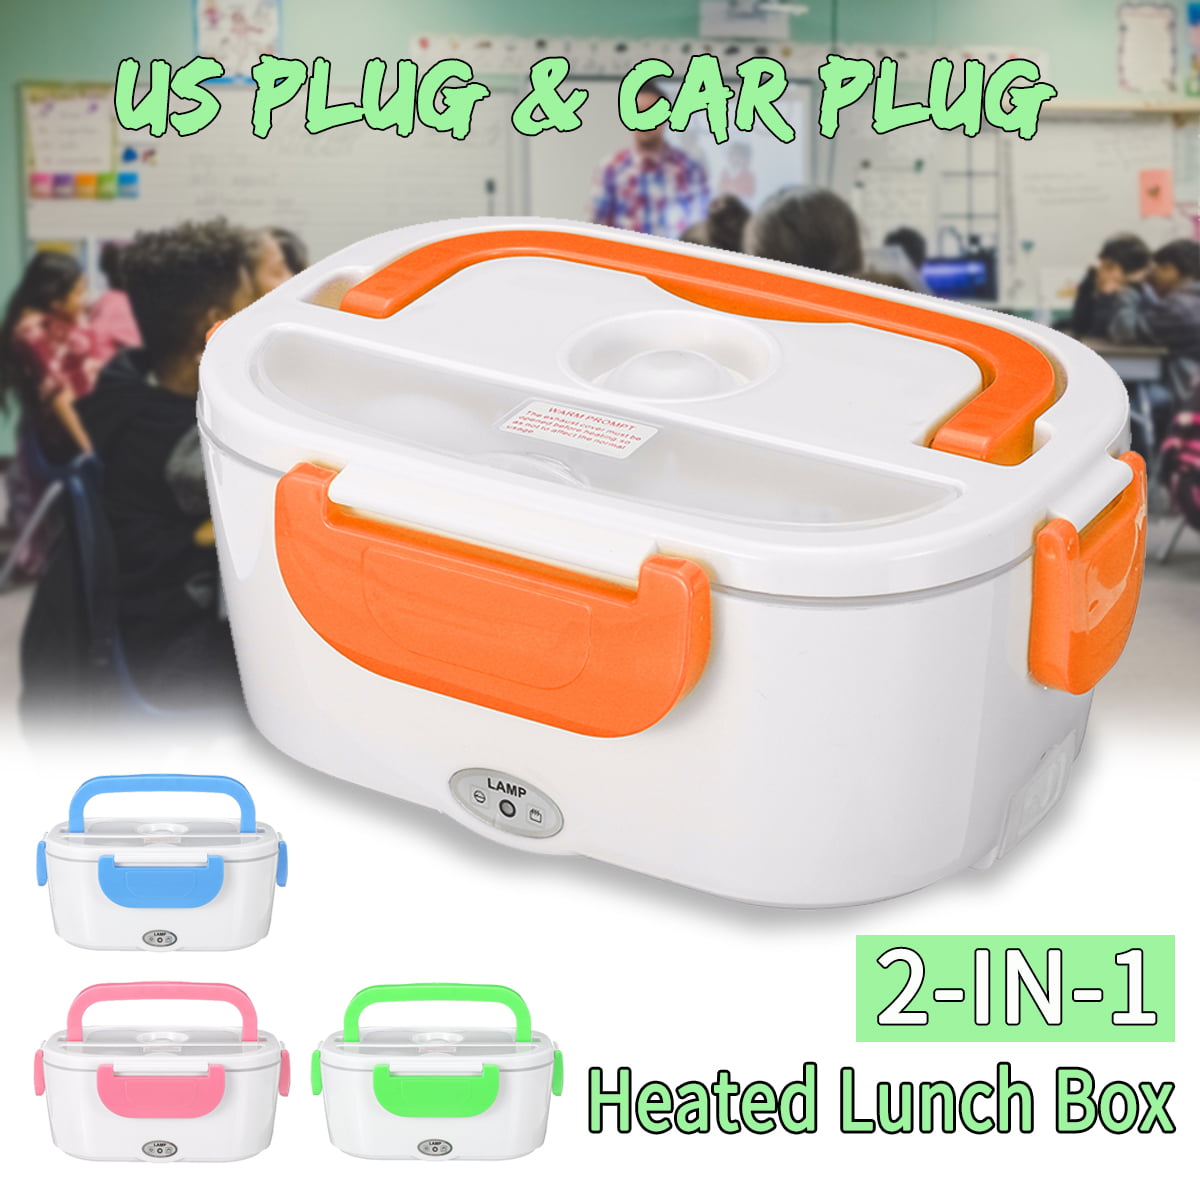 Portable Electric Heated Car Plug Heating Lunch Box Bento Travel Food Warmer 12V